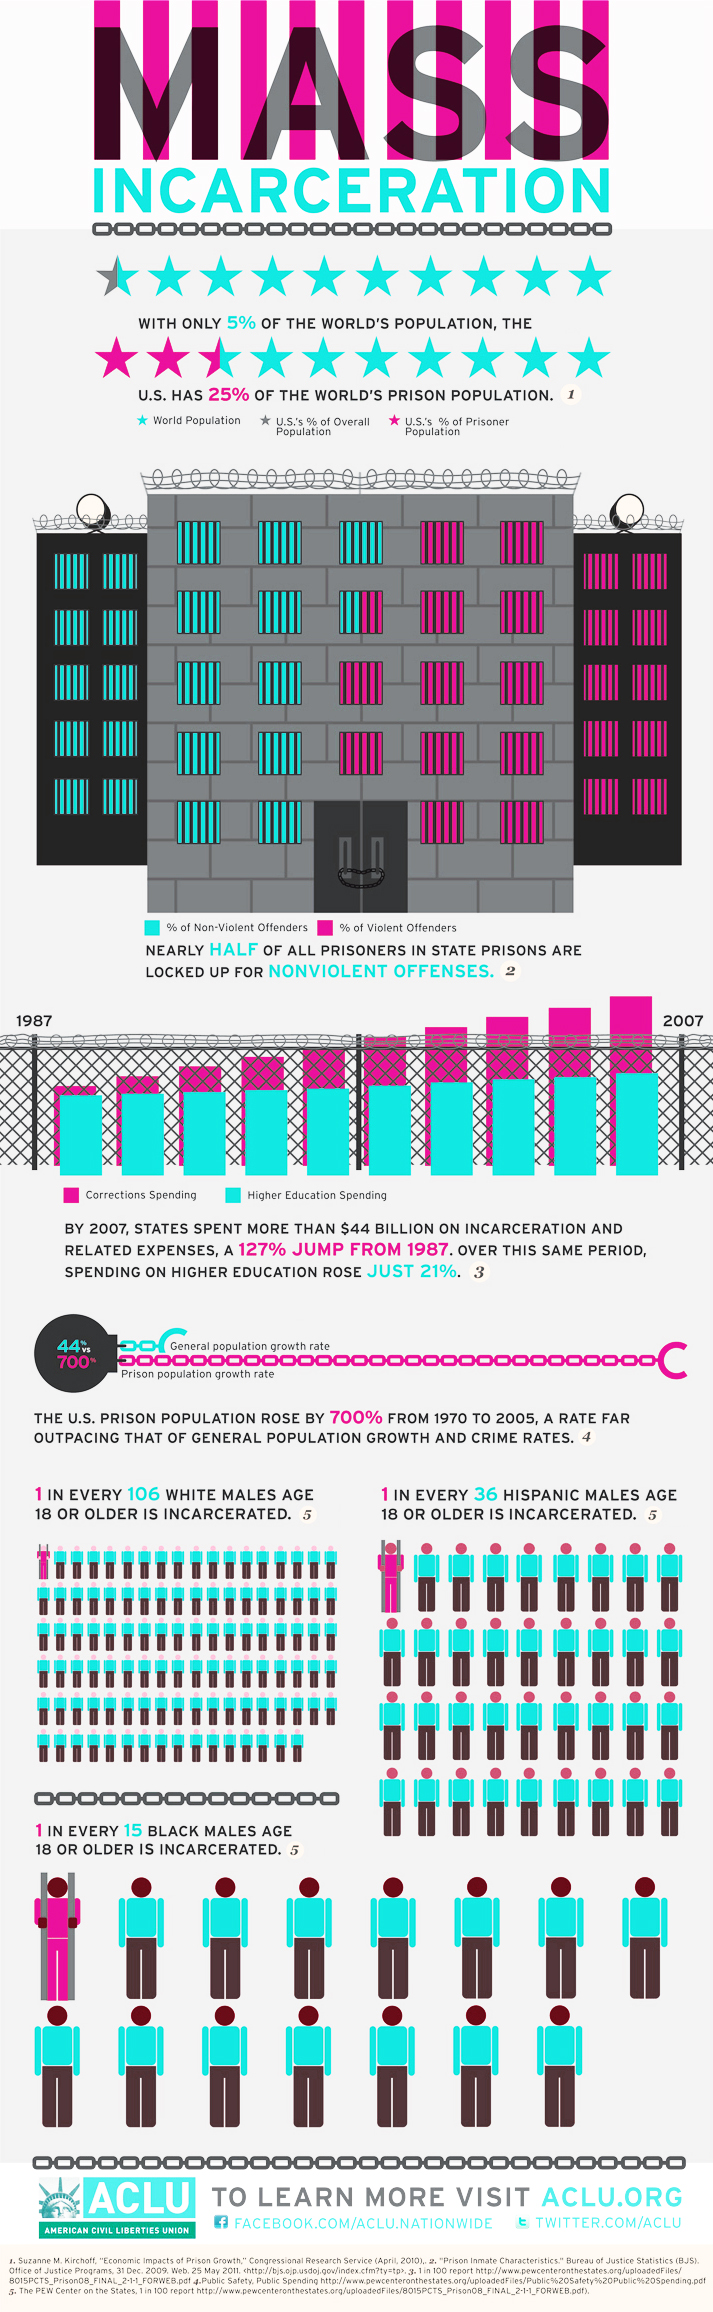 mass-incarceration-infographic.jpg